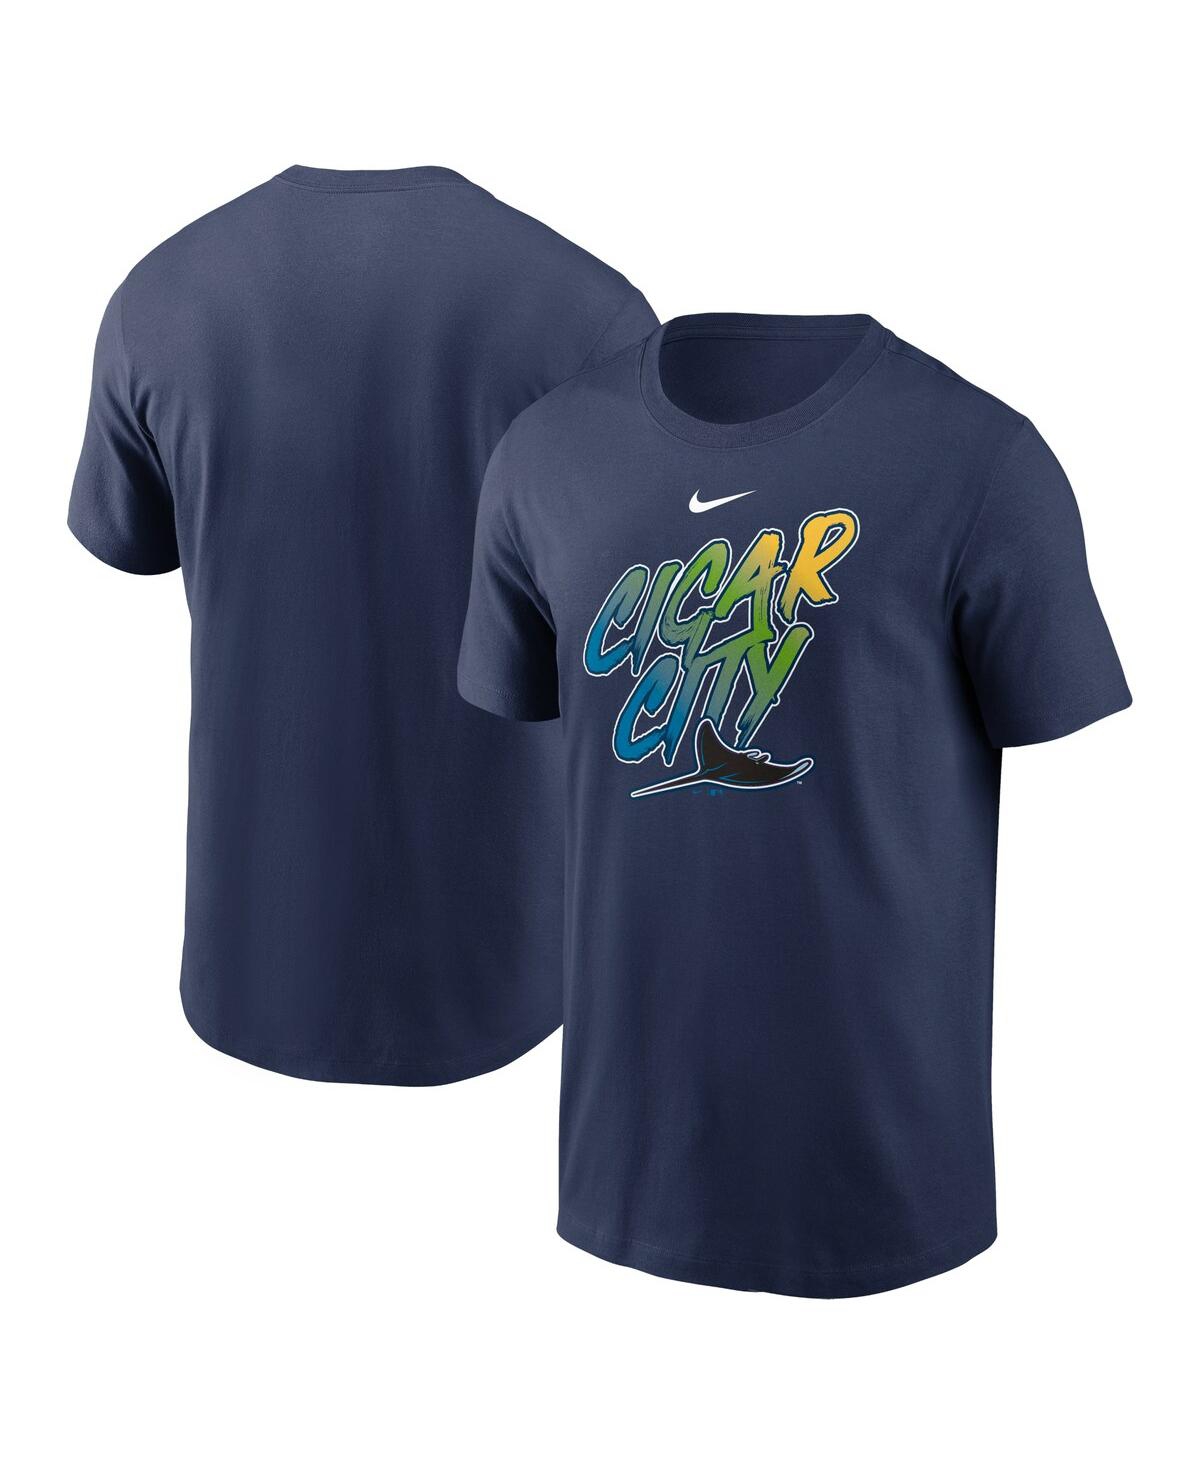 Shop Nike Men's  Navy Tampa Bay Rays Cigar City Local Team T-shirt